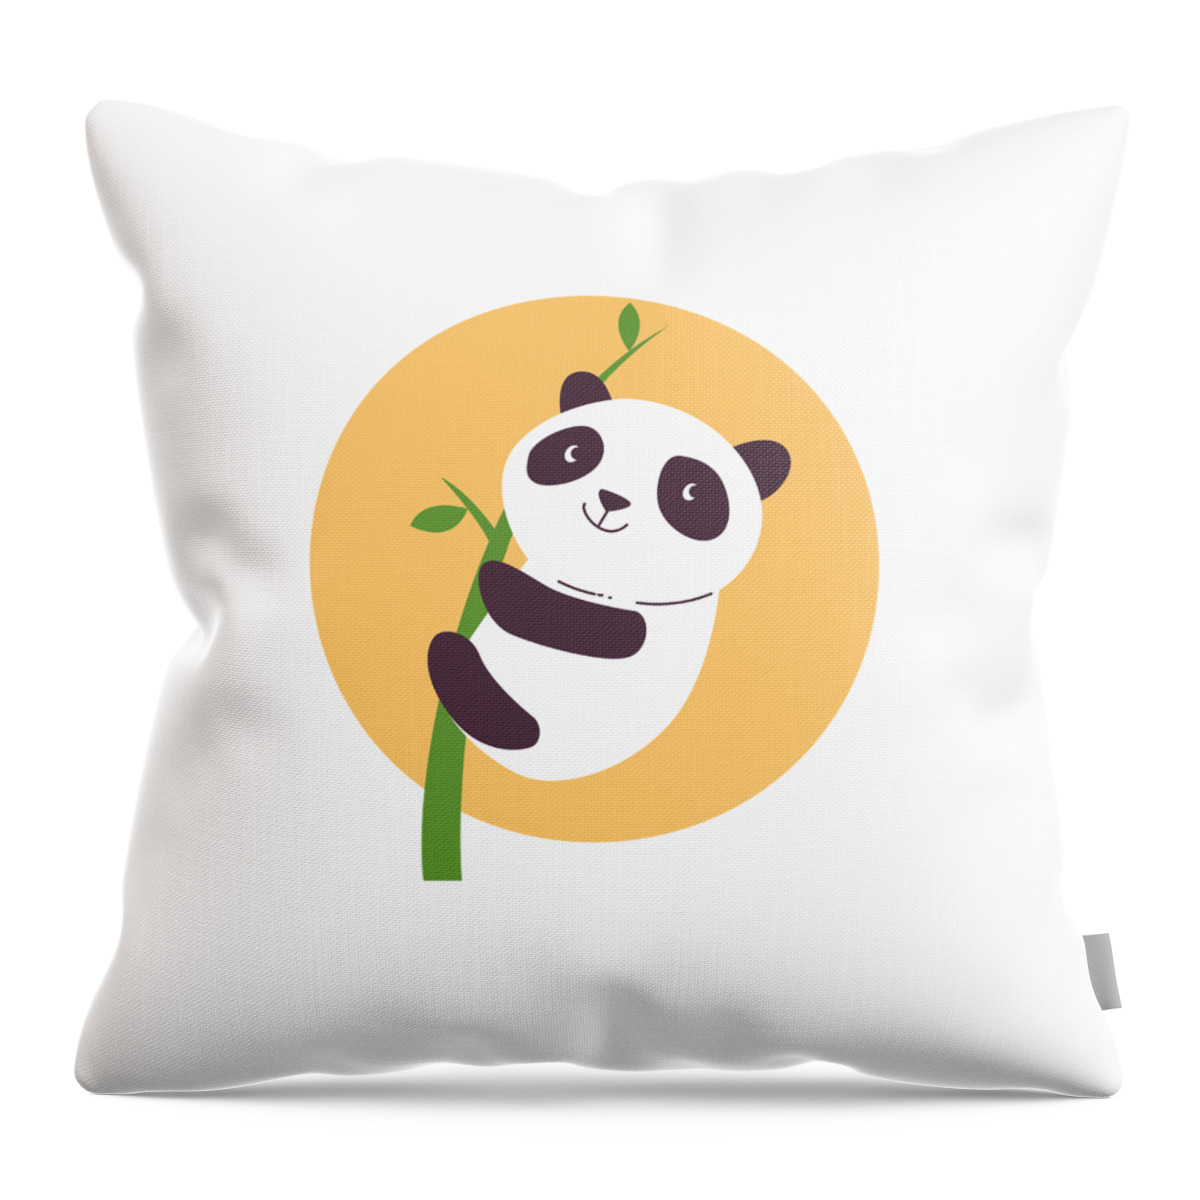 Adorable Throw Pillow featuring the digital art Baby Panda Hugging an Eucalyptus Plant by Jacob Zelazny